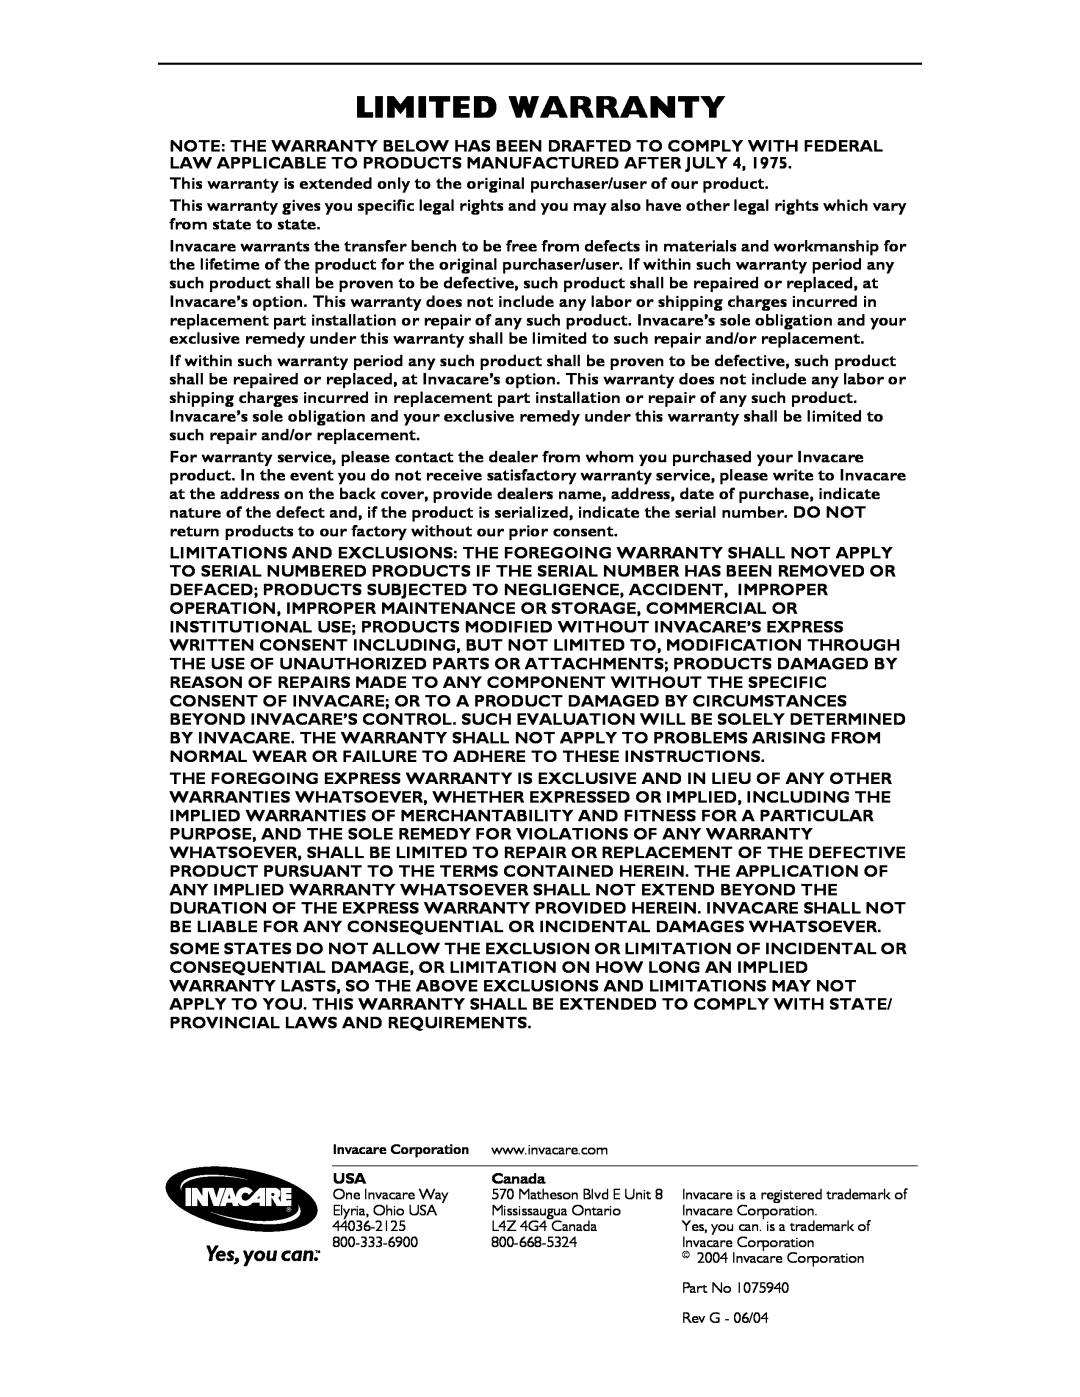 Invacare 98070, 9873, 9871 instruction sheet Limited Warranty, Canada 